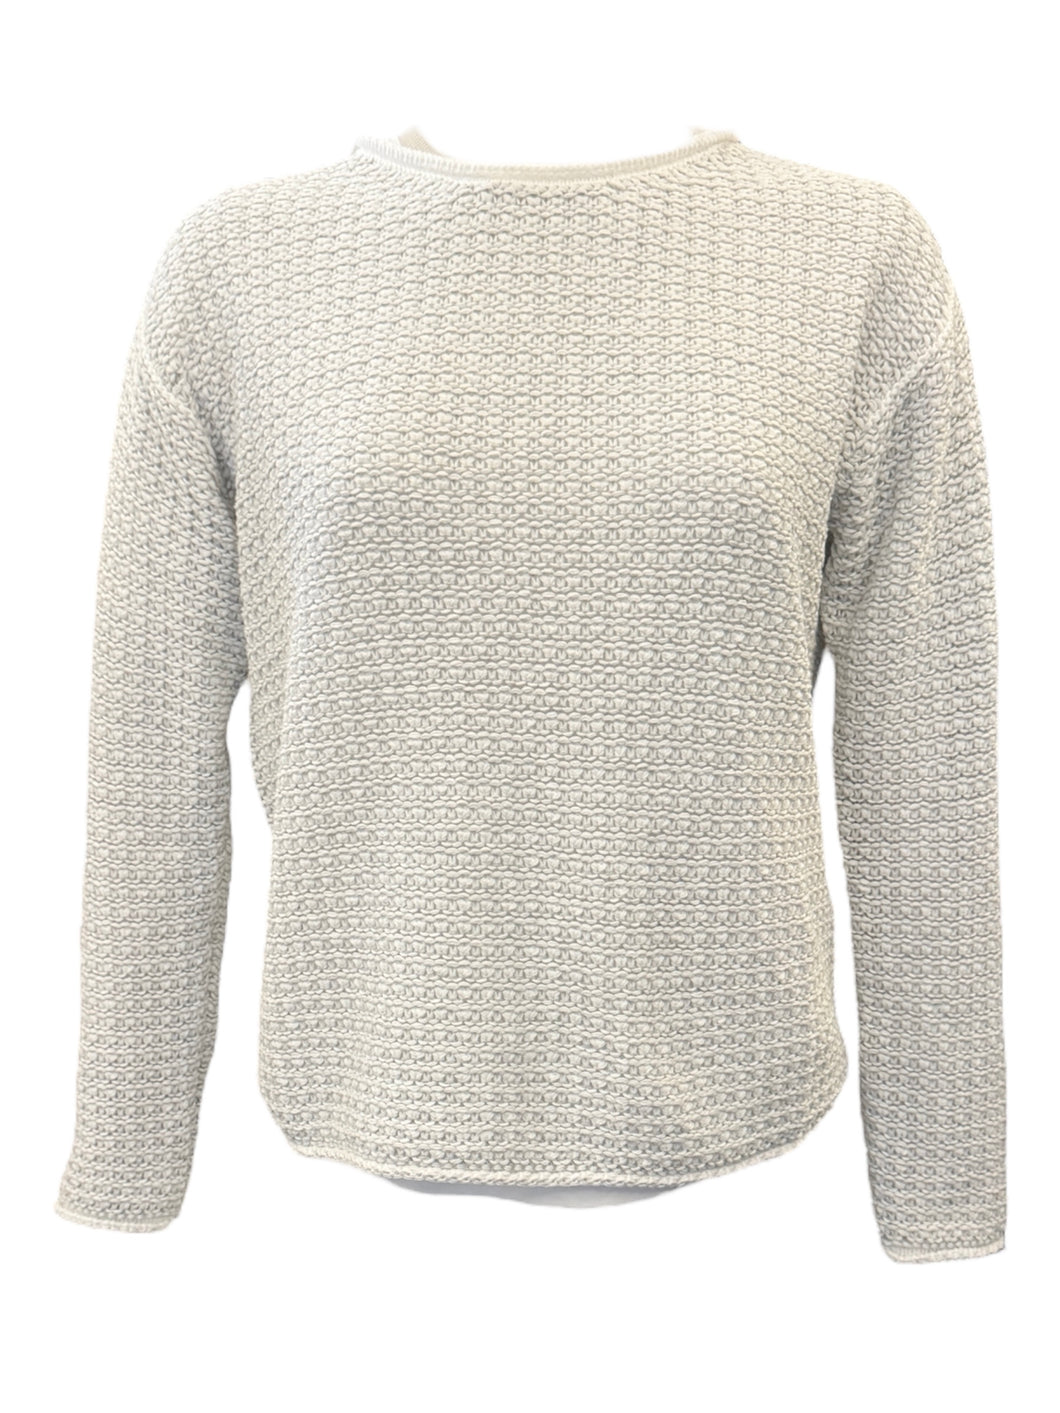 Hubert Gasser Loose Weave Crewneck Sweater - White